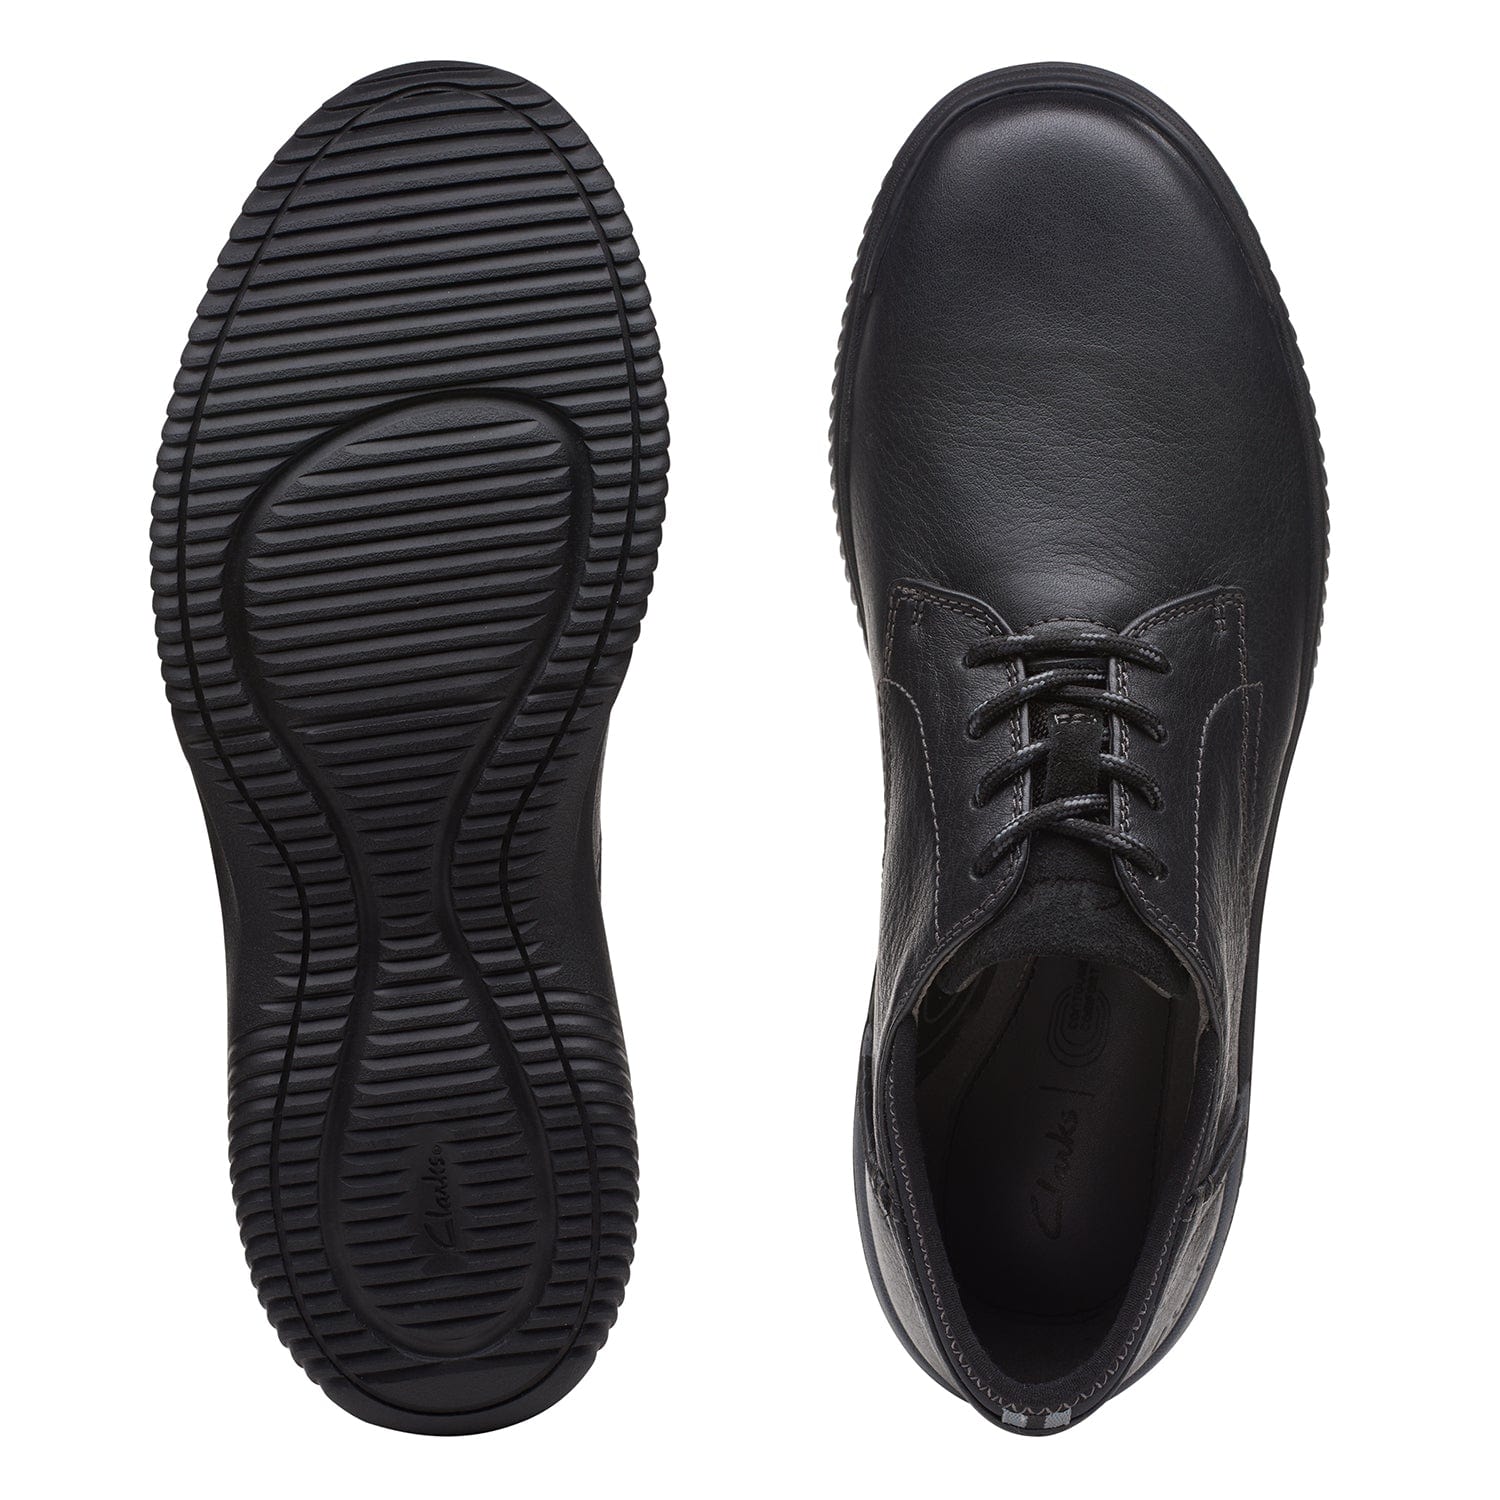 Clarks Donaway Plain - Shoes - Black Leather - 261634548 - H Width (Wide Fit)